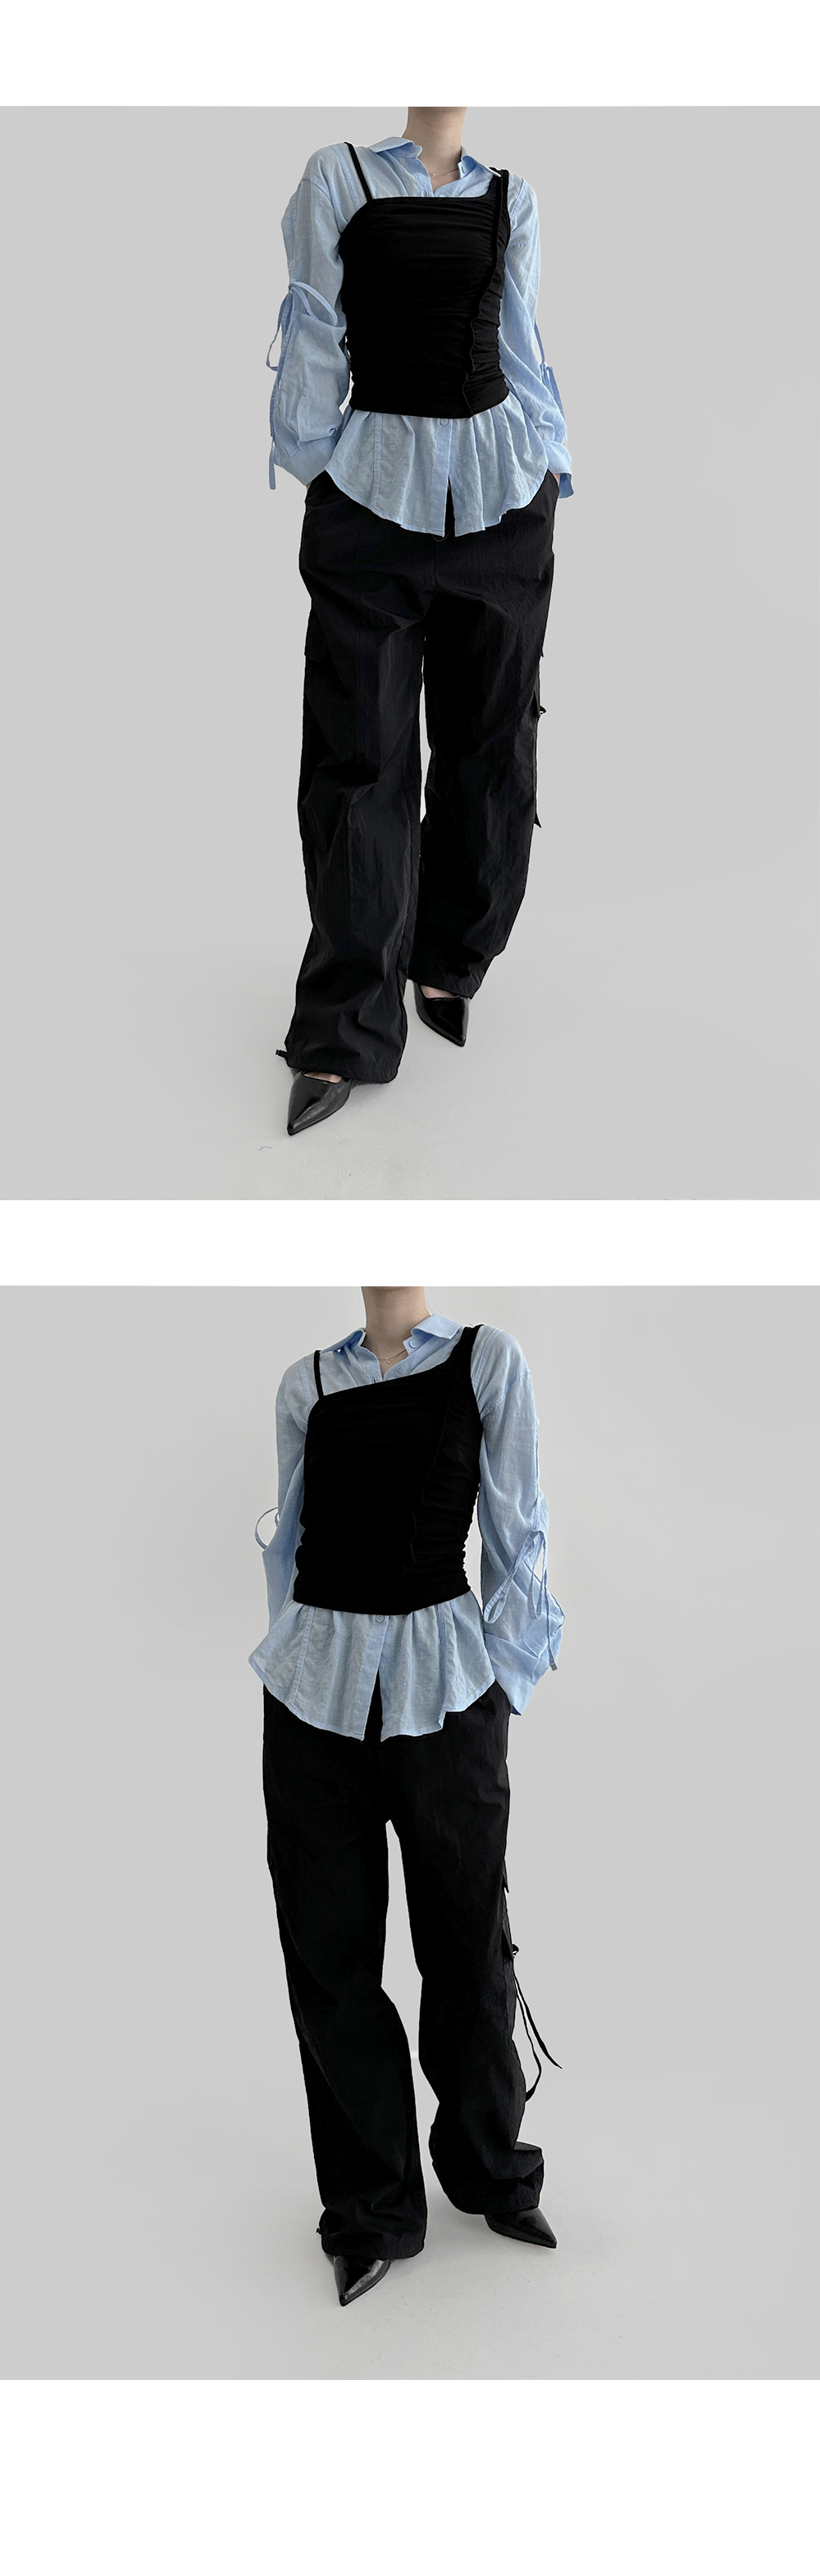 suspenders skirt/pants white color image-S1L5